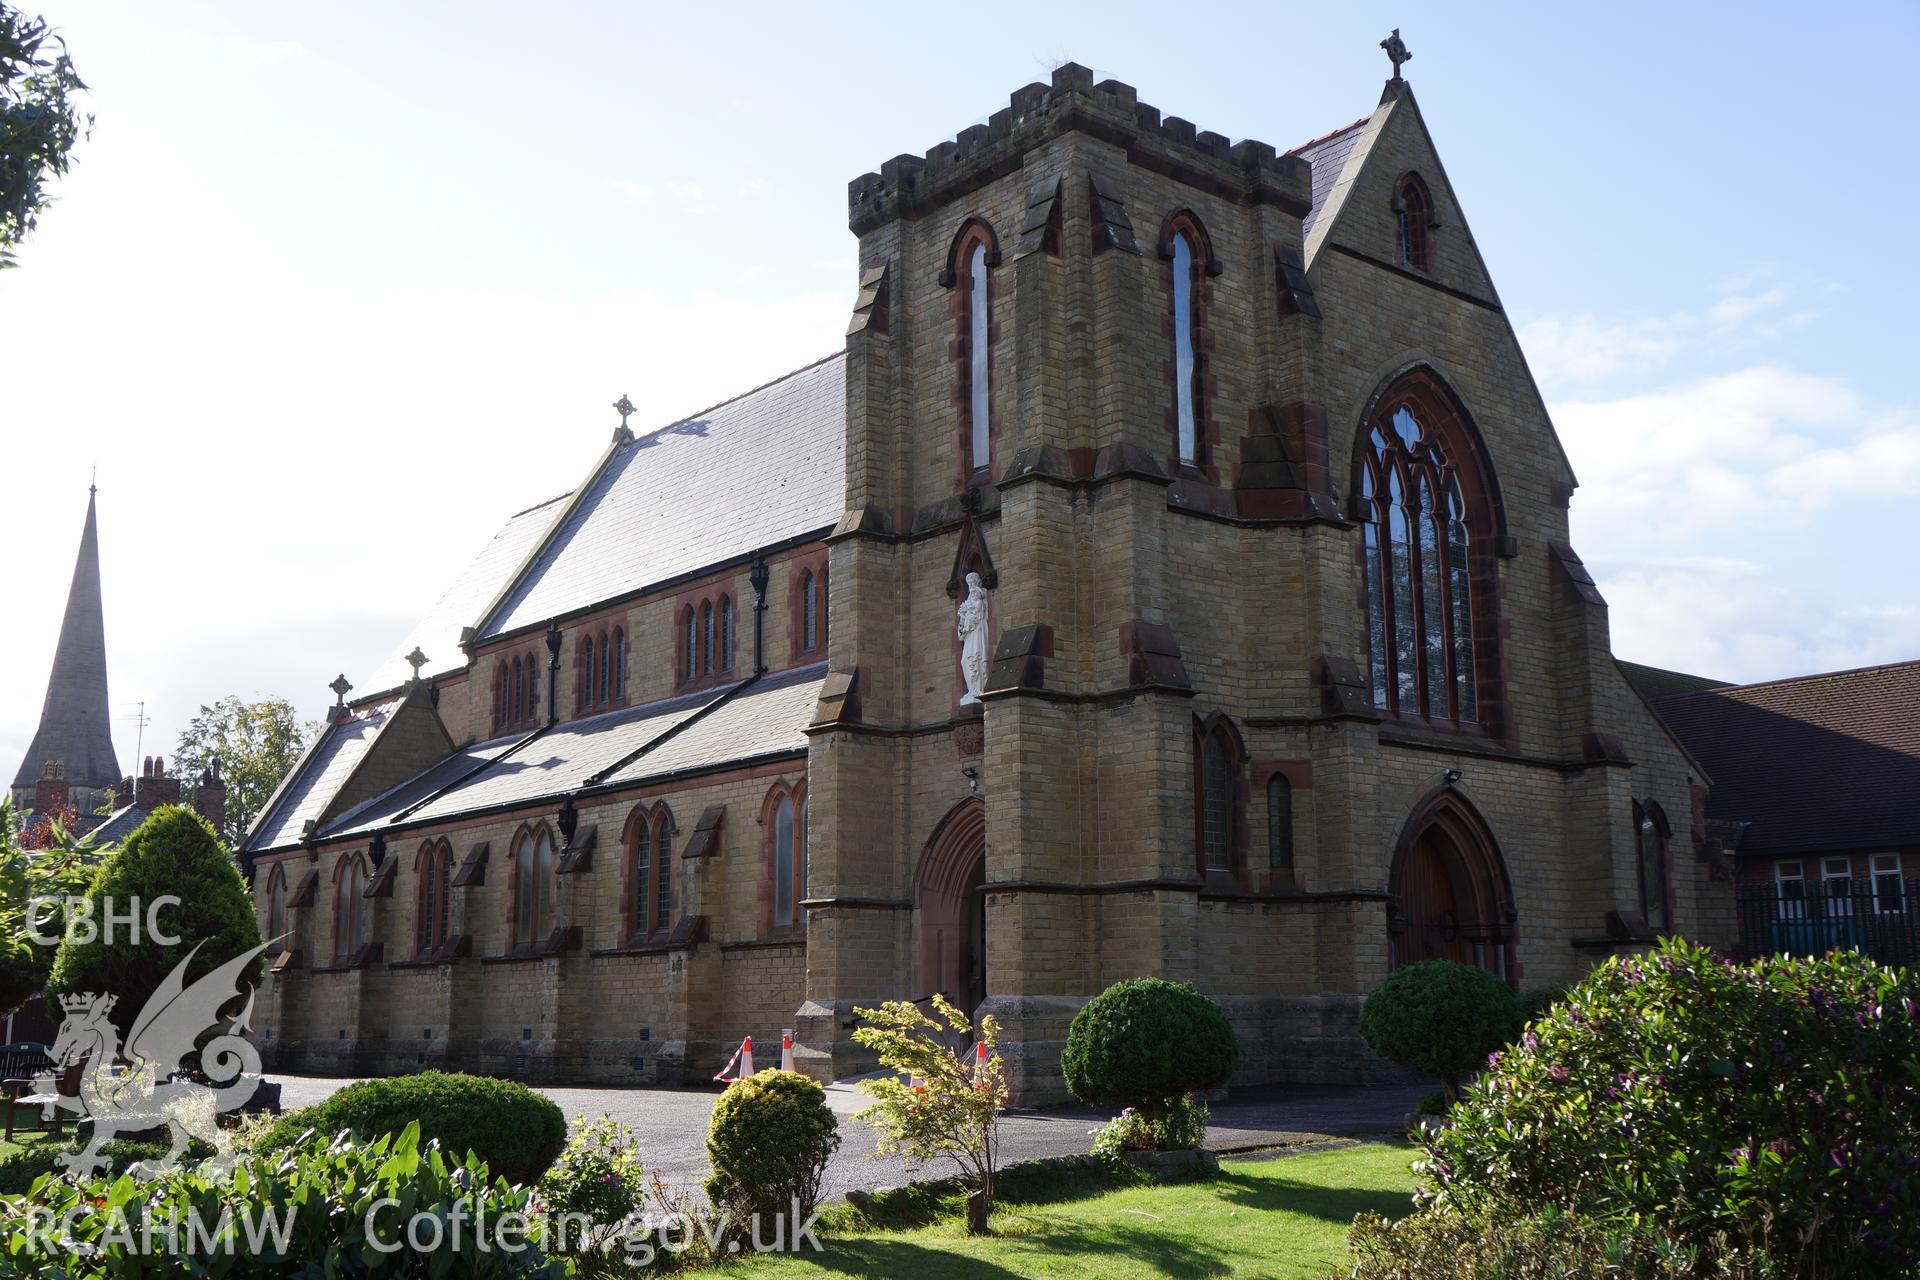 Digital colour photograph showing exterior of St Joseph's Catholic church, Colwyn Bay.